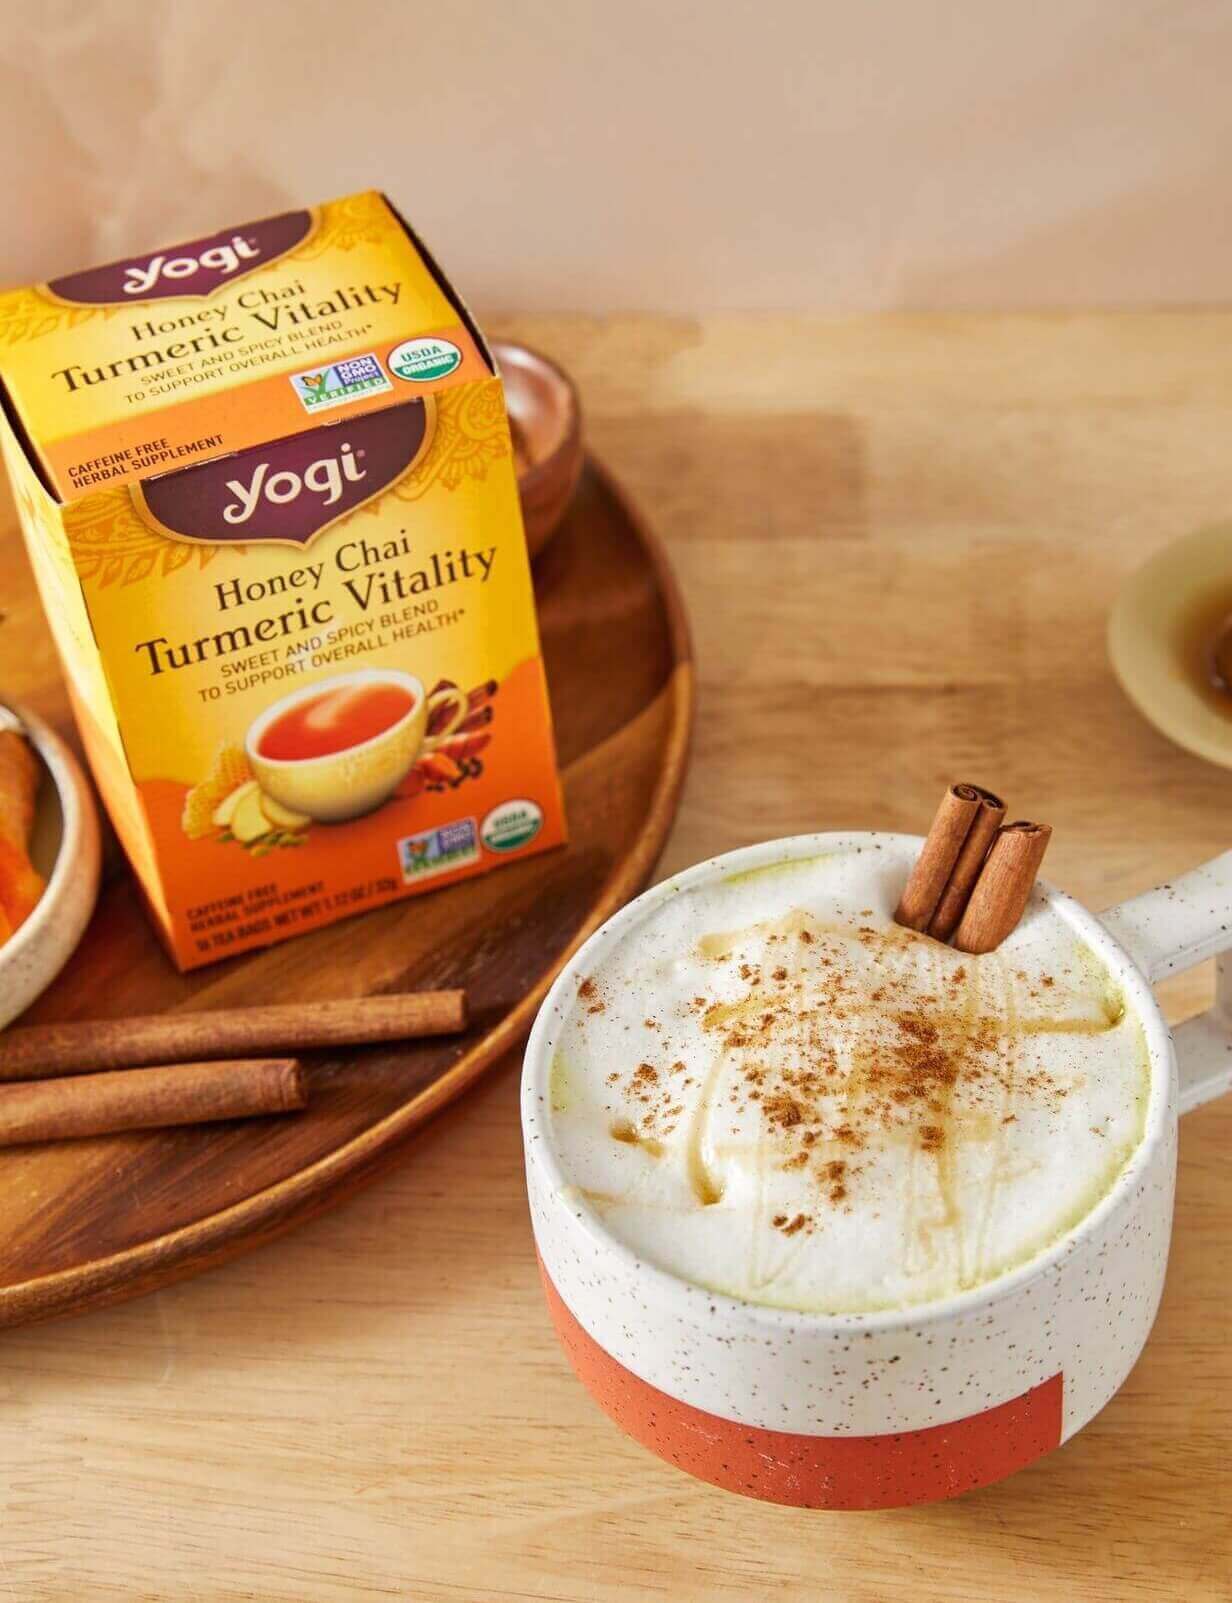 A mug of Honey Golden Milk Latte sits on a counter next to a carton of Yogi Honey Chai Turmeric Vitality Tea